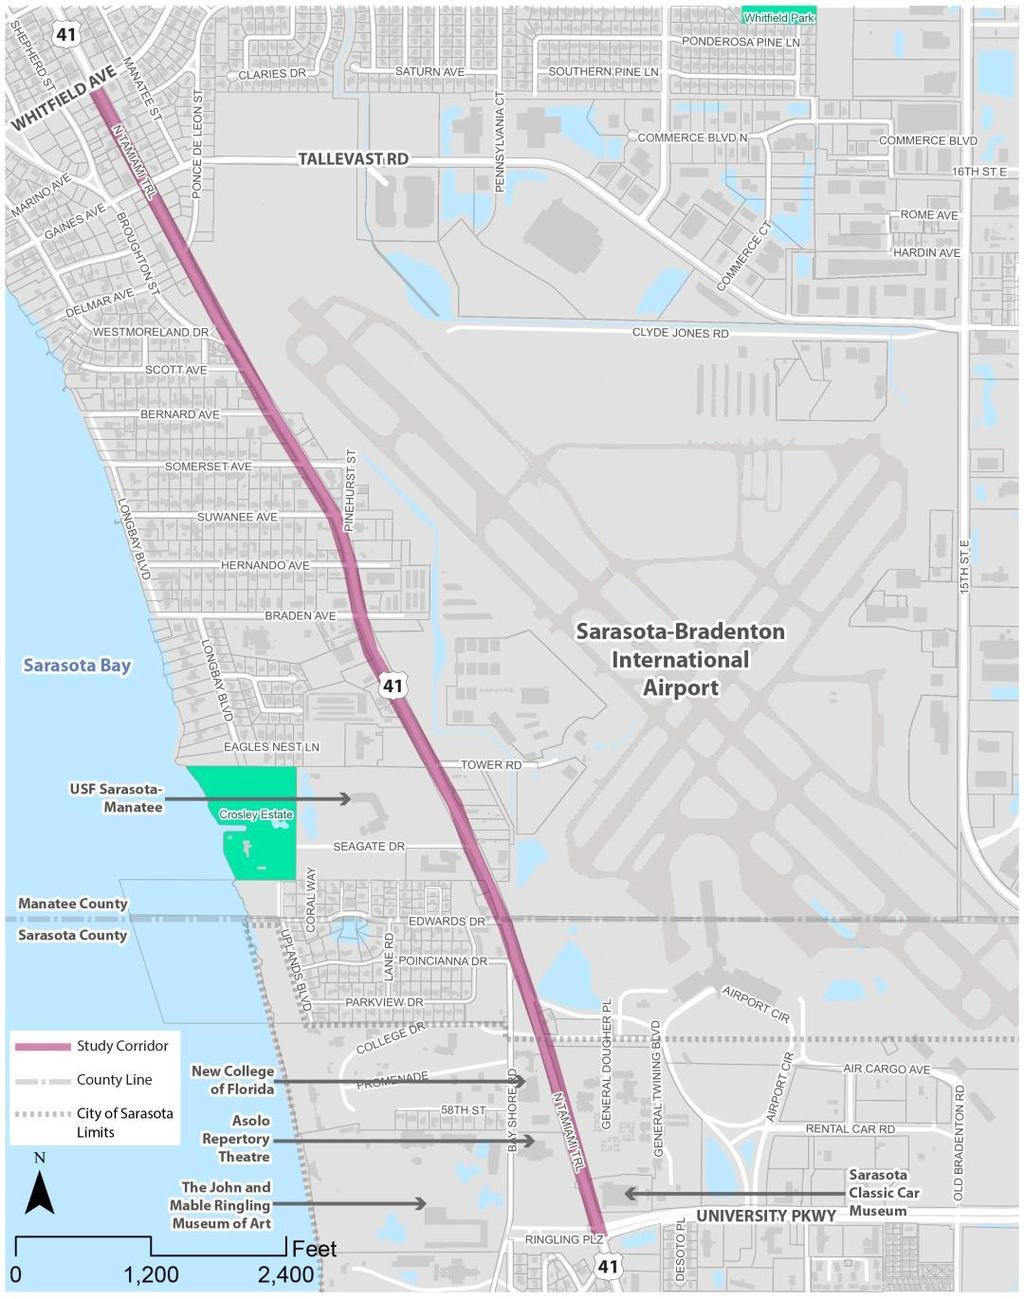 Corridor Study Overview Major Stakeholders Sarasota-Bradenton International Airport New College of